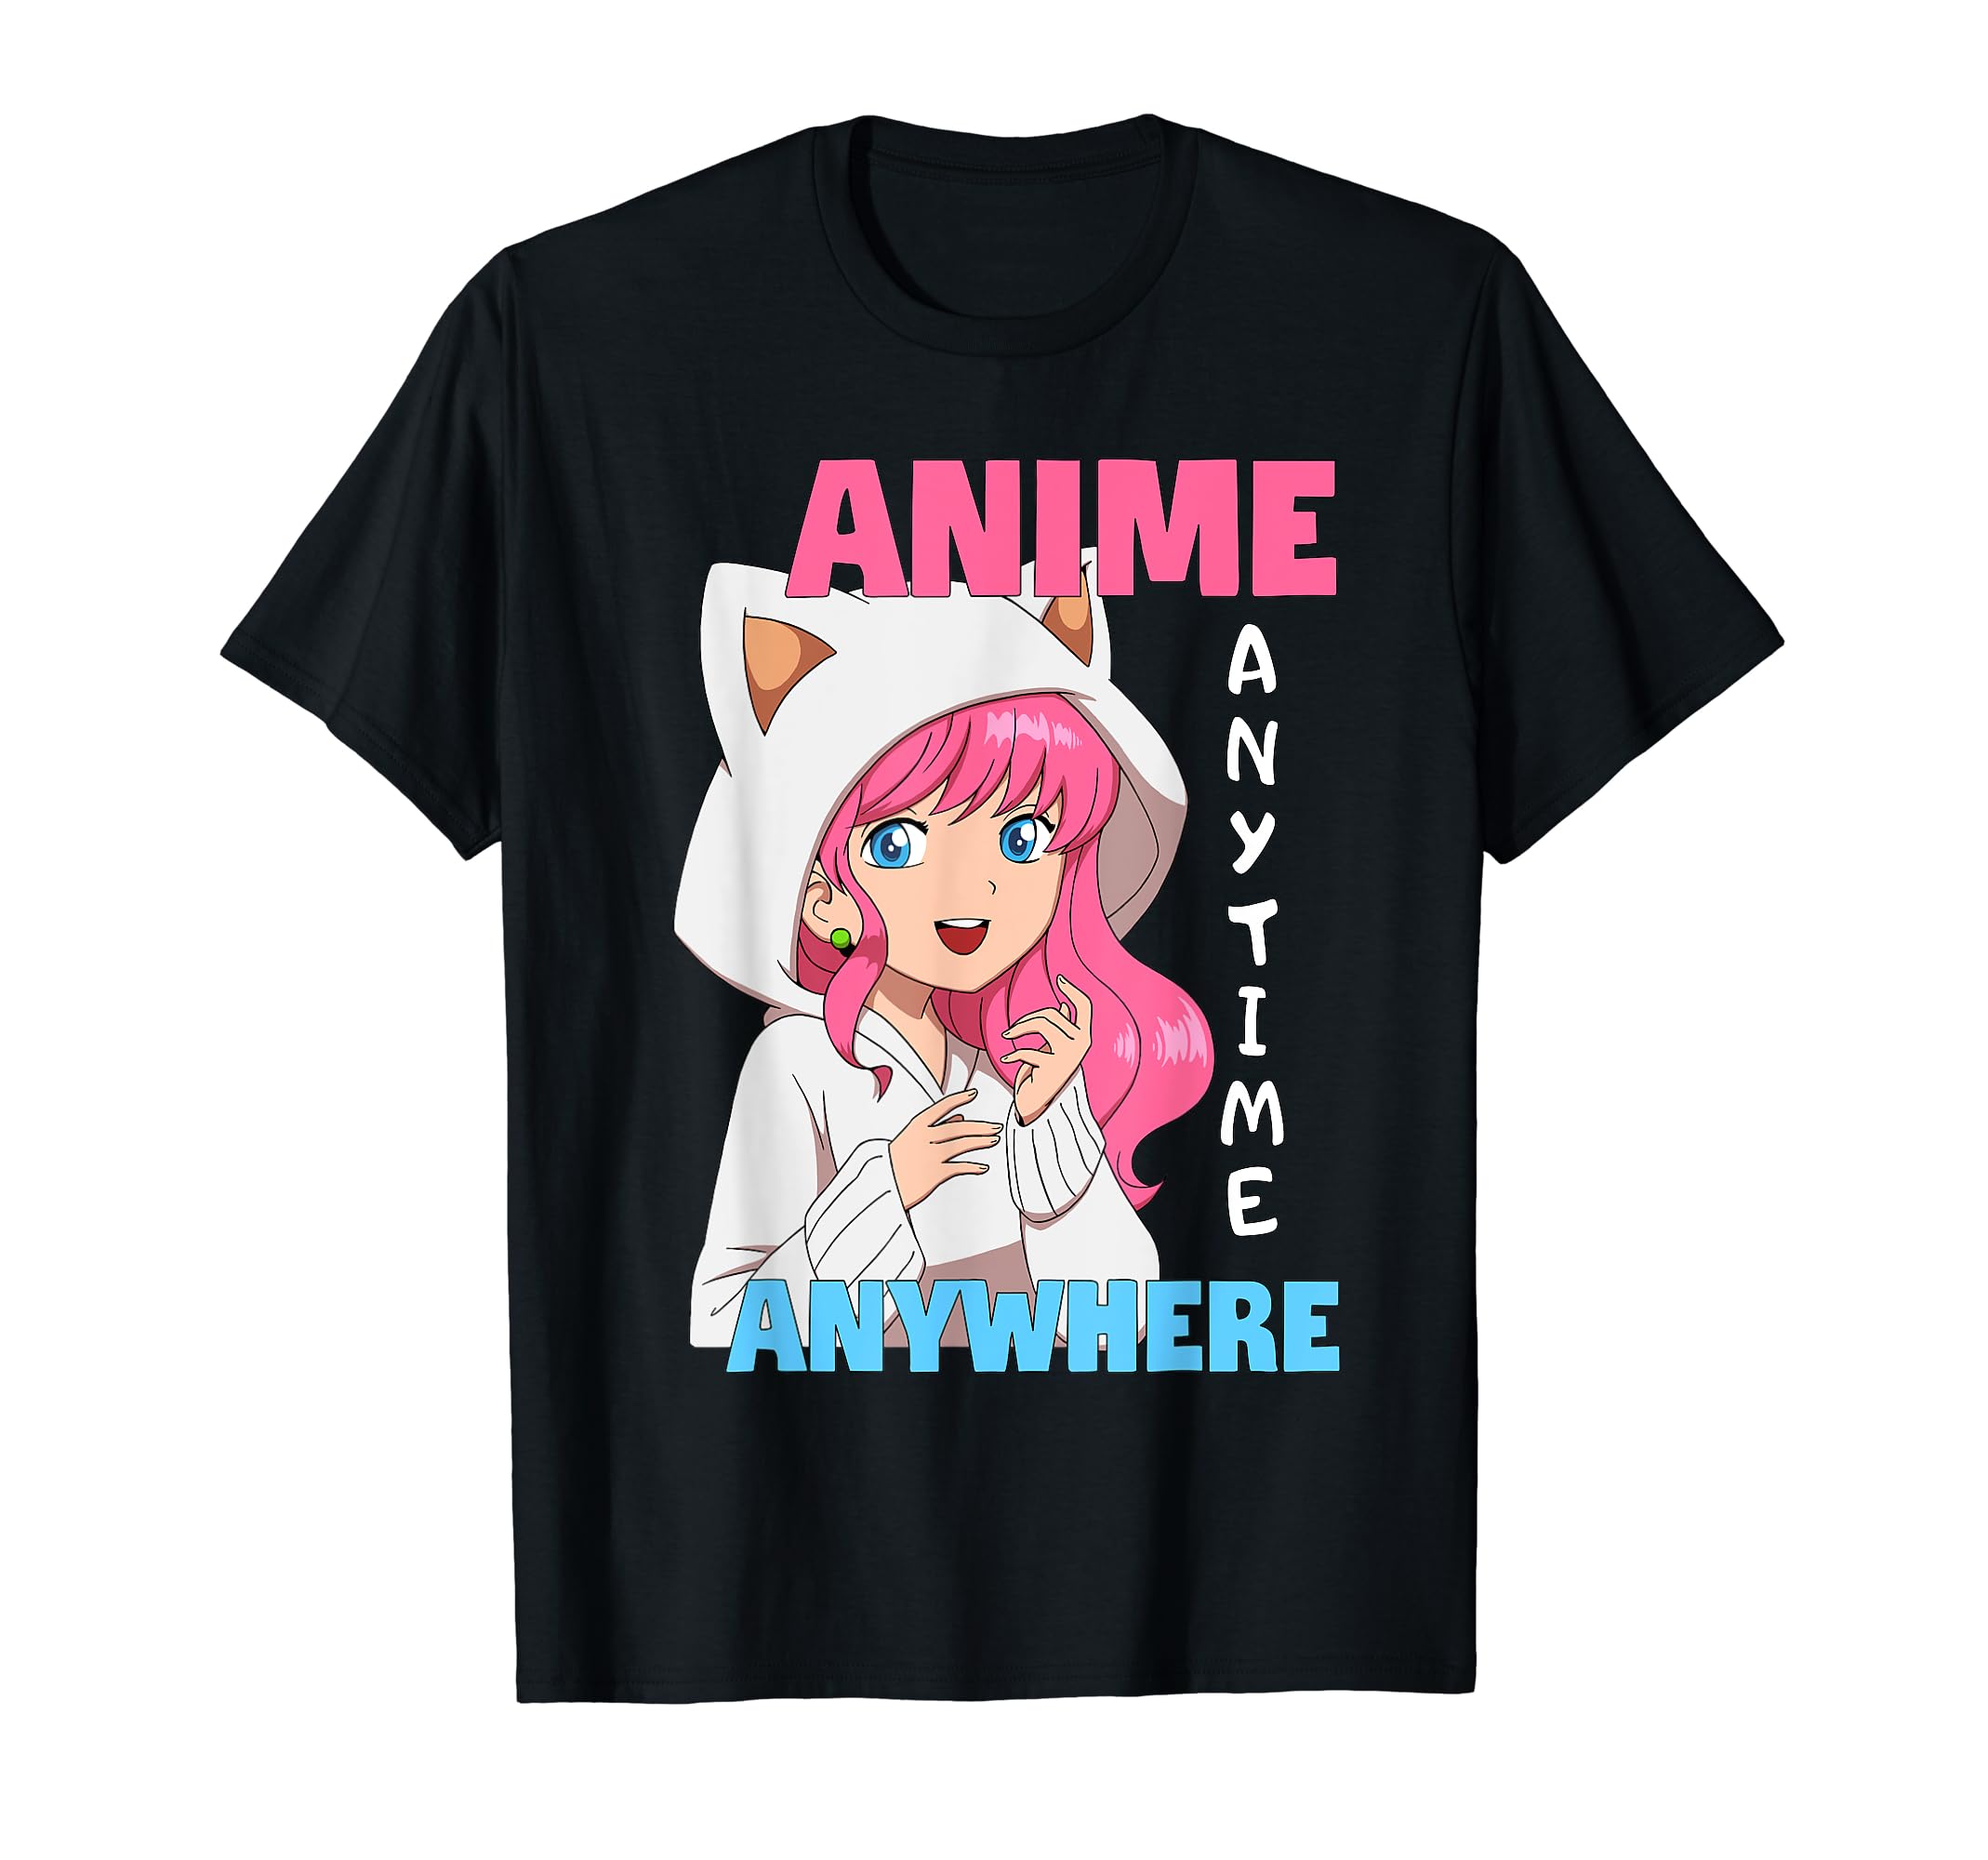 CoCopeaunt Kawaii Shirt Kawaii Clothes Anime Shirt Kawaii Shirts for Women  Kawaii Clothing for Teen Girls - Walmart.com